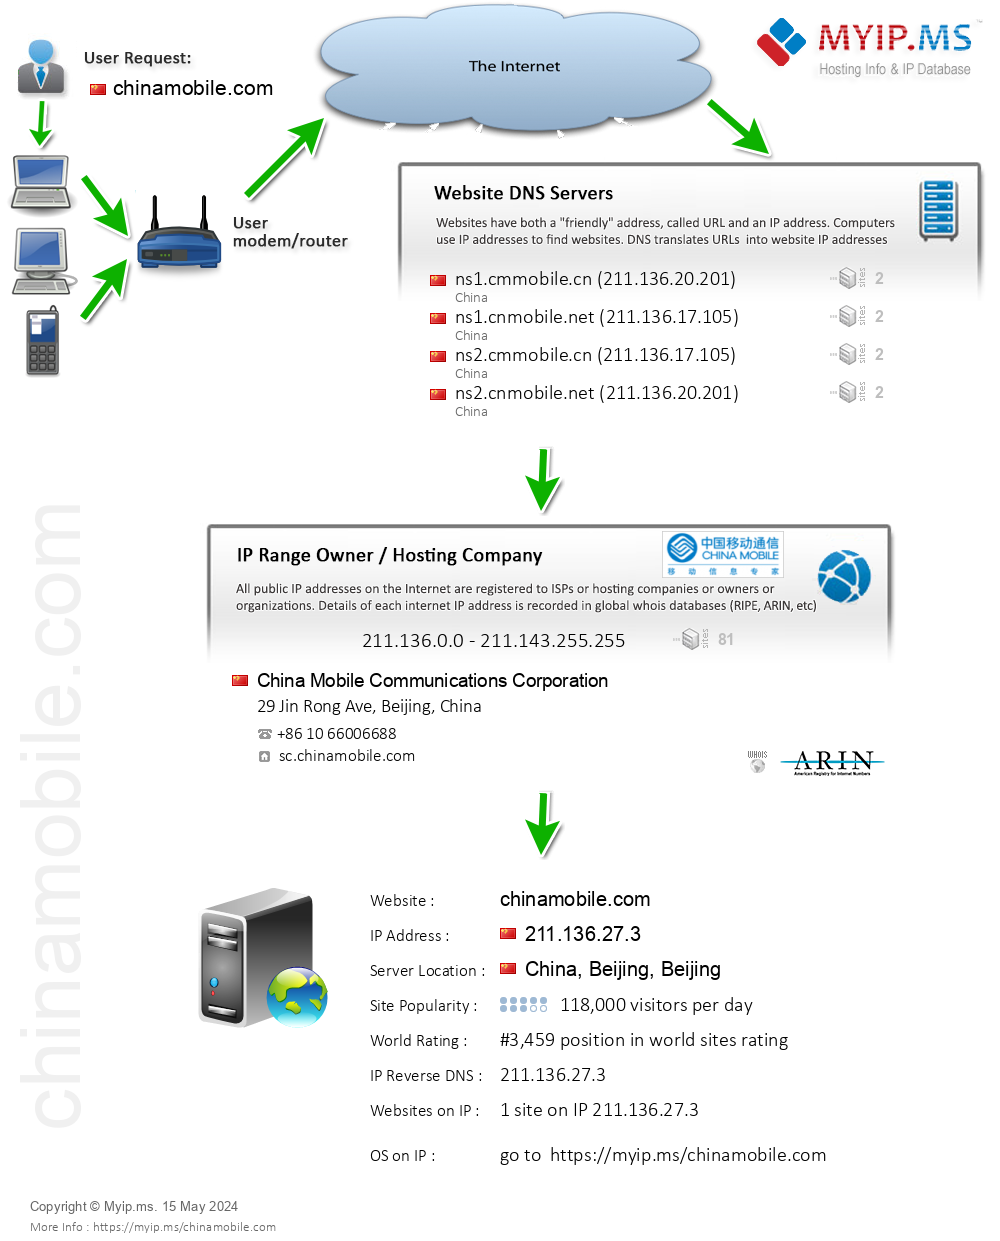 Chinamobile.com - Website Hosting Visual IP Diagram